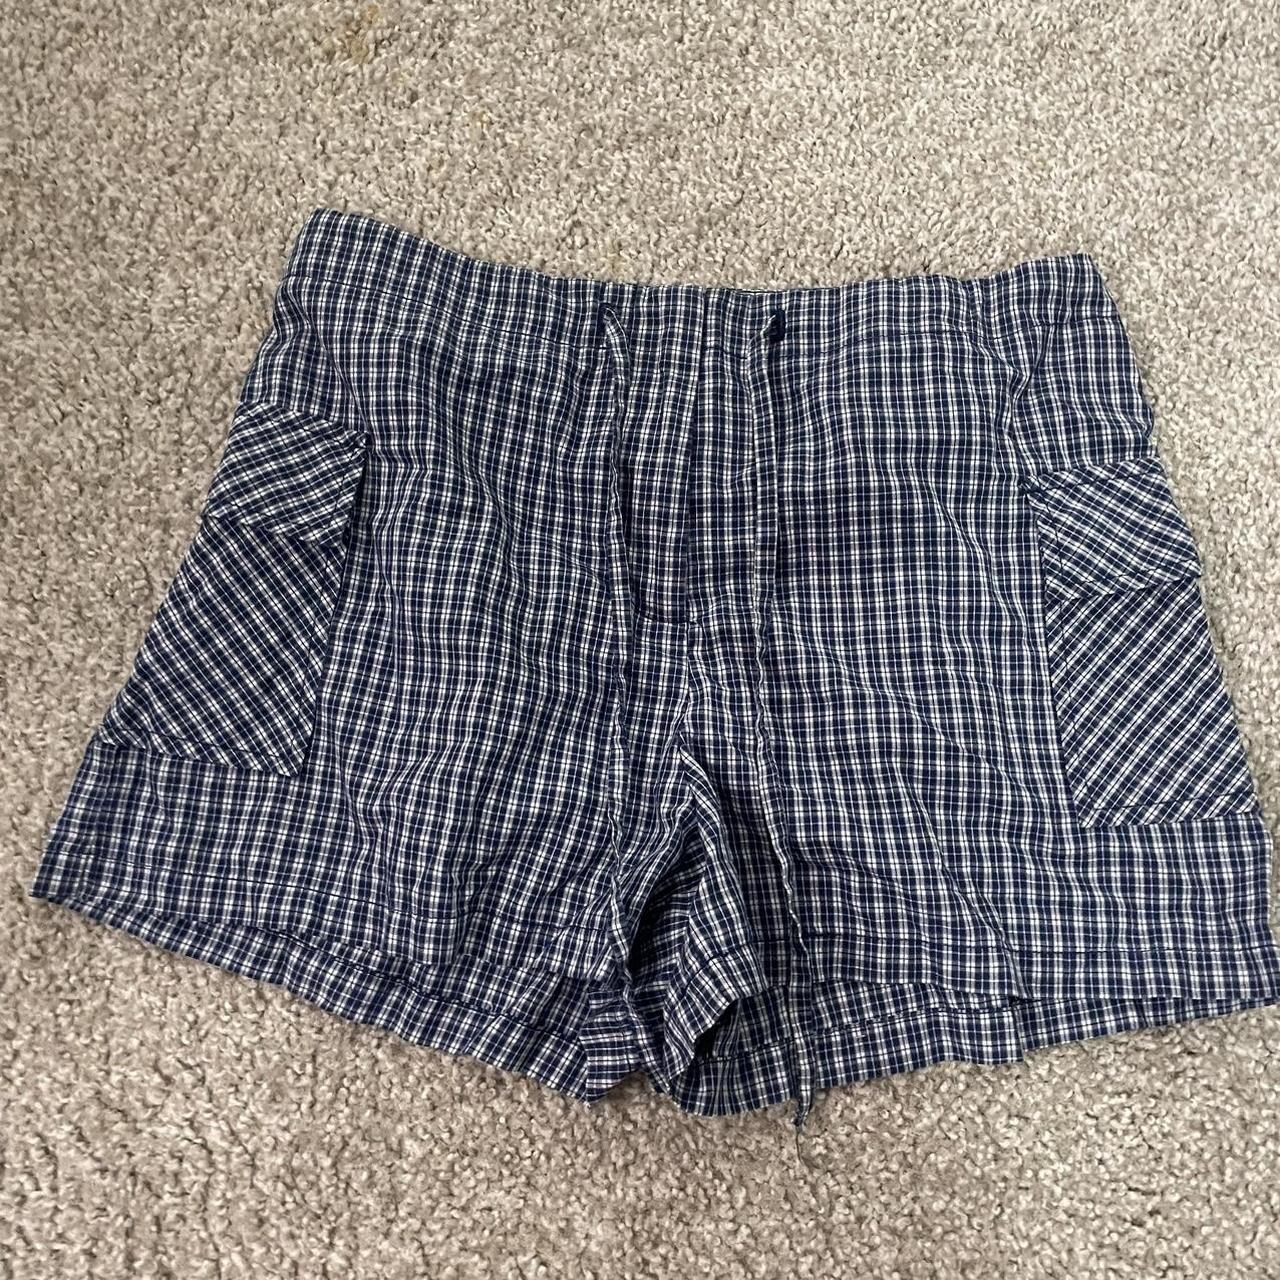 vintage my michelle shorts fit like a size 4 - Depop